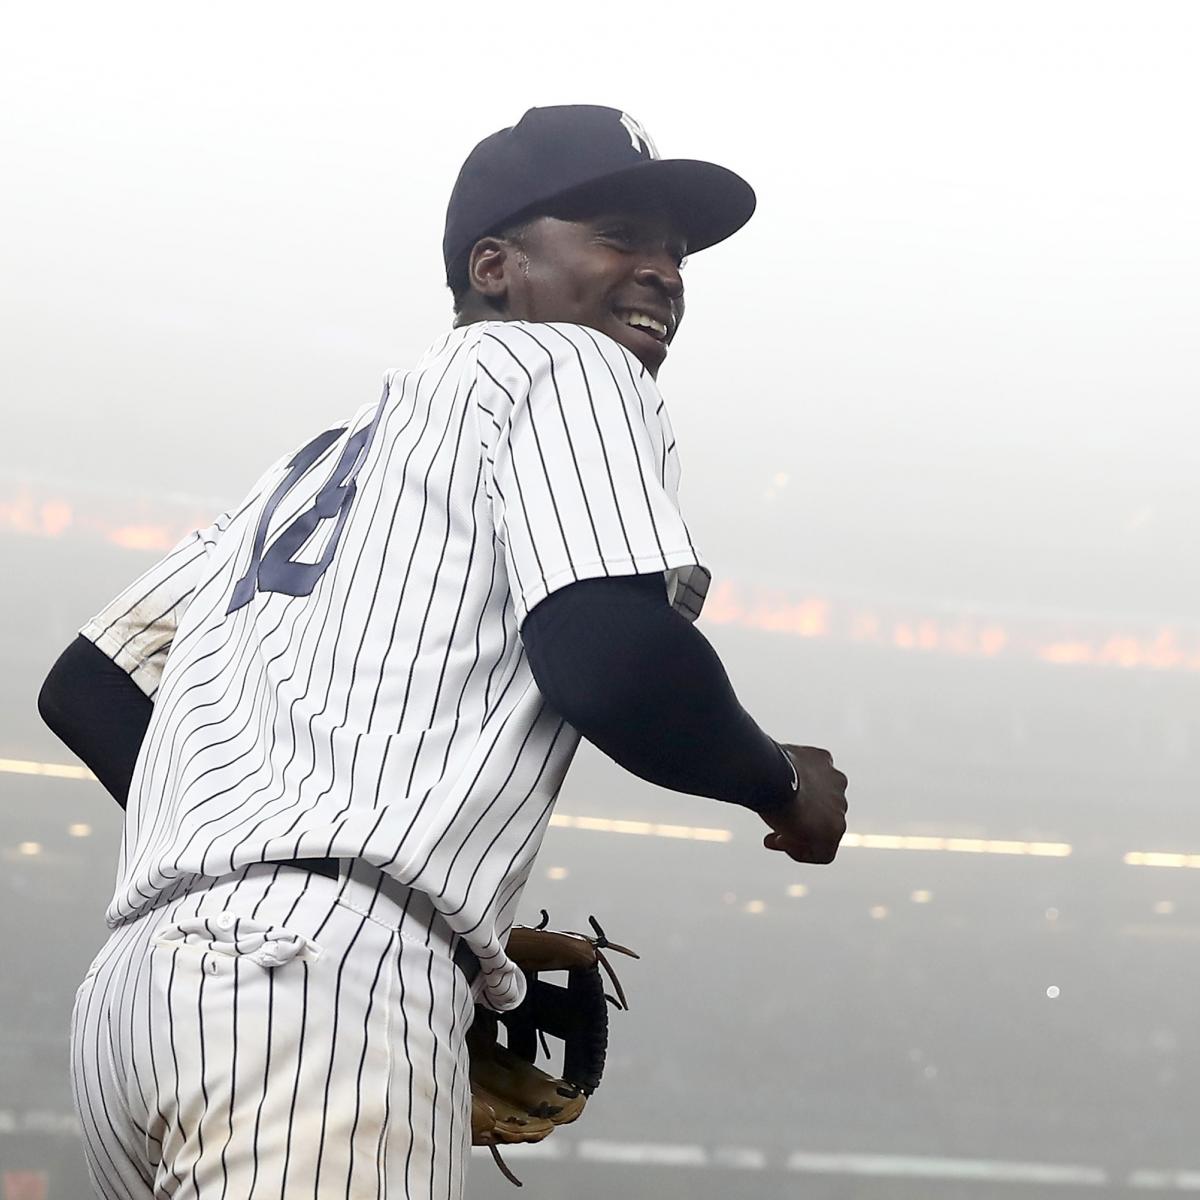 Didi Gregorius hears Yankees' fan chants: for Derek Jeter